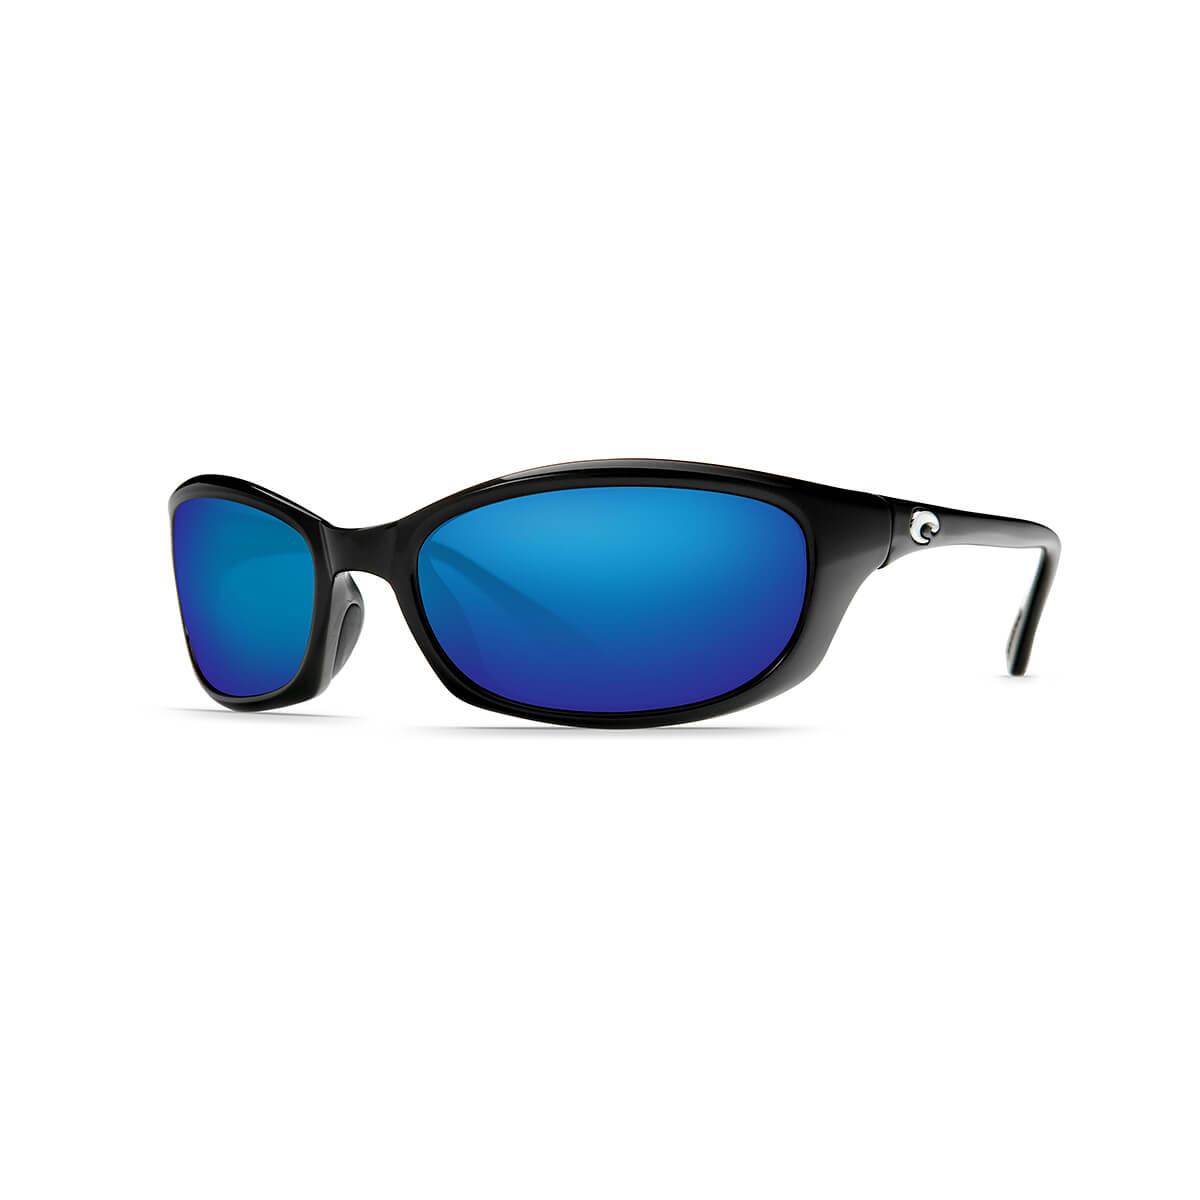  Harpoon 580g Sunglasses - Polarized Glass